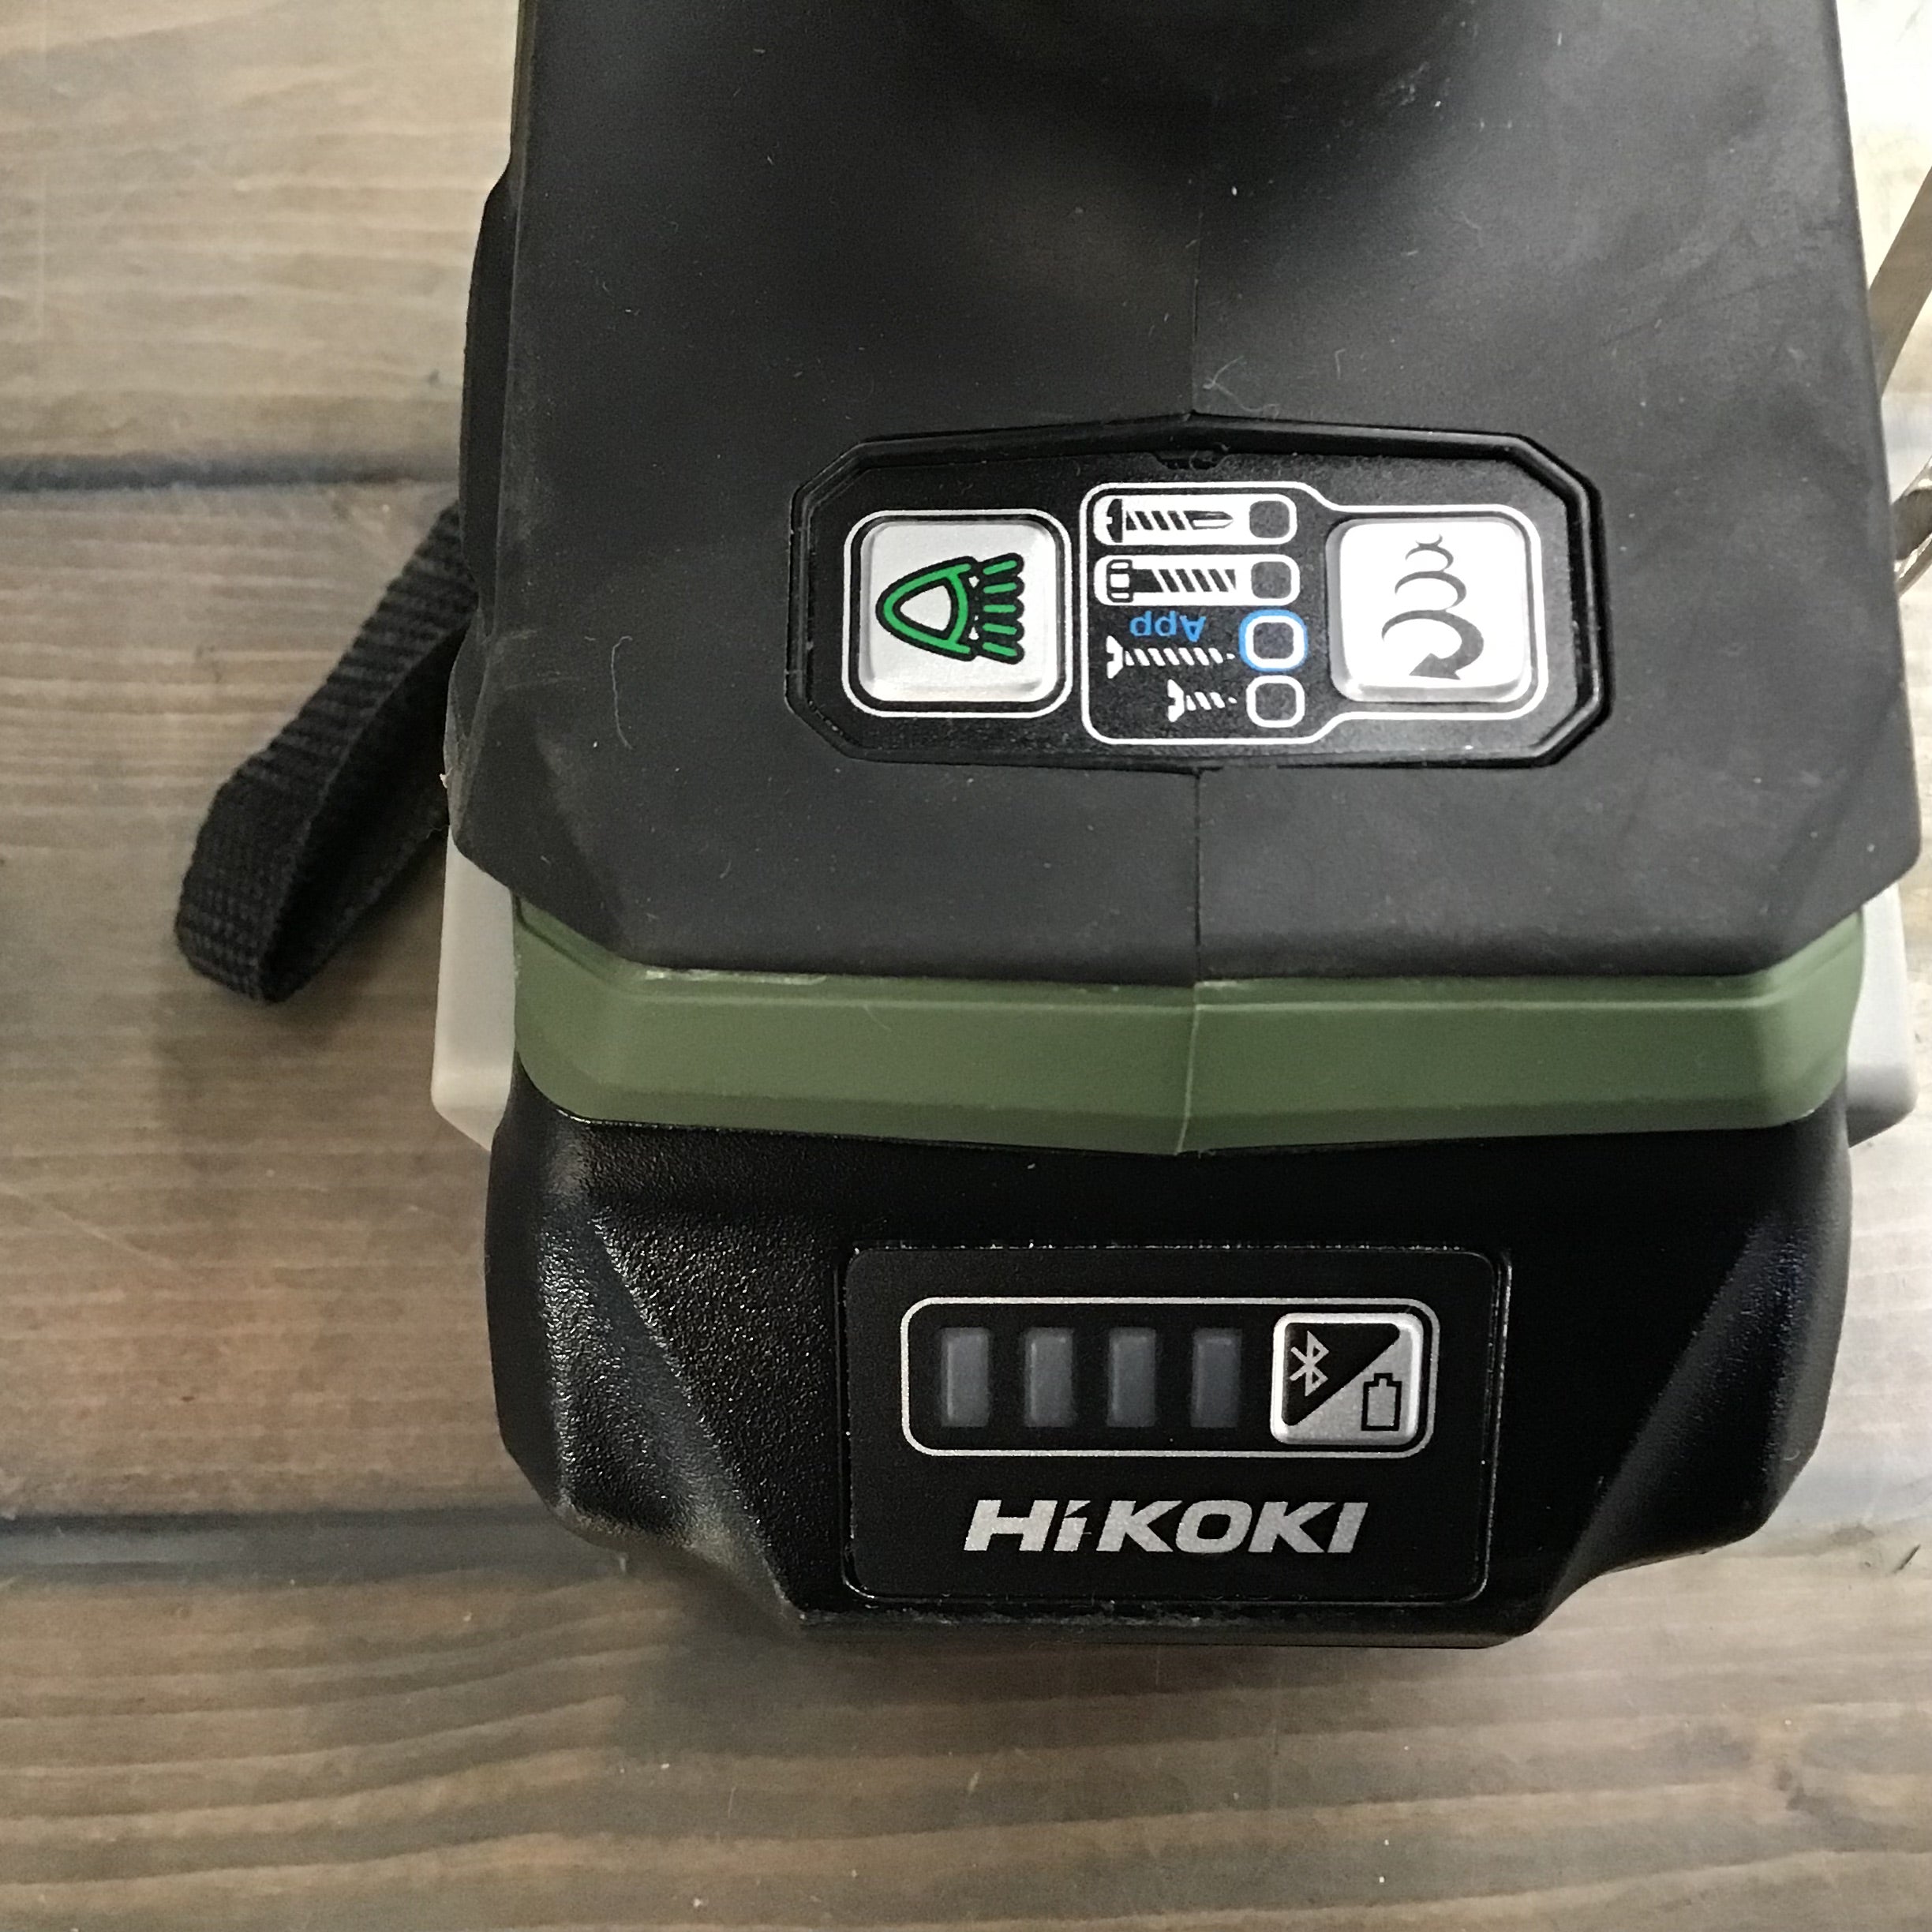 〇HiKOKI(ハイコーキ) 36Vインパクトドライバ フォレストグリーン 新型